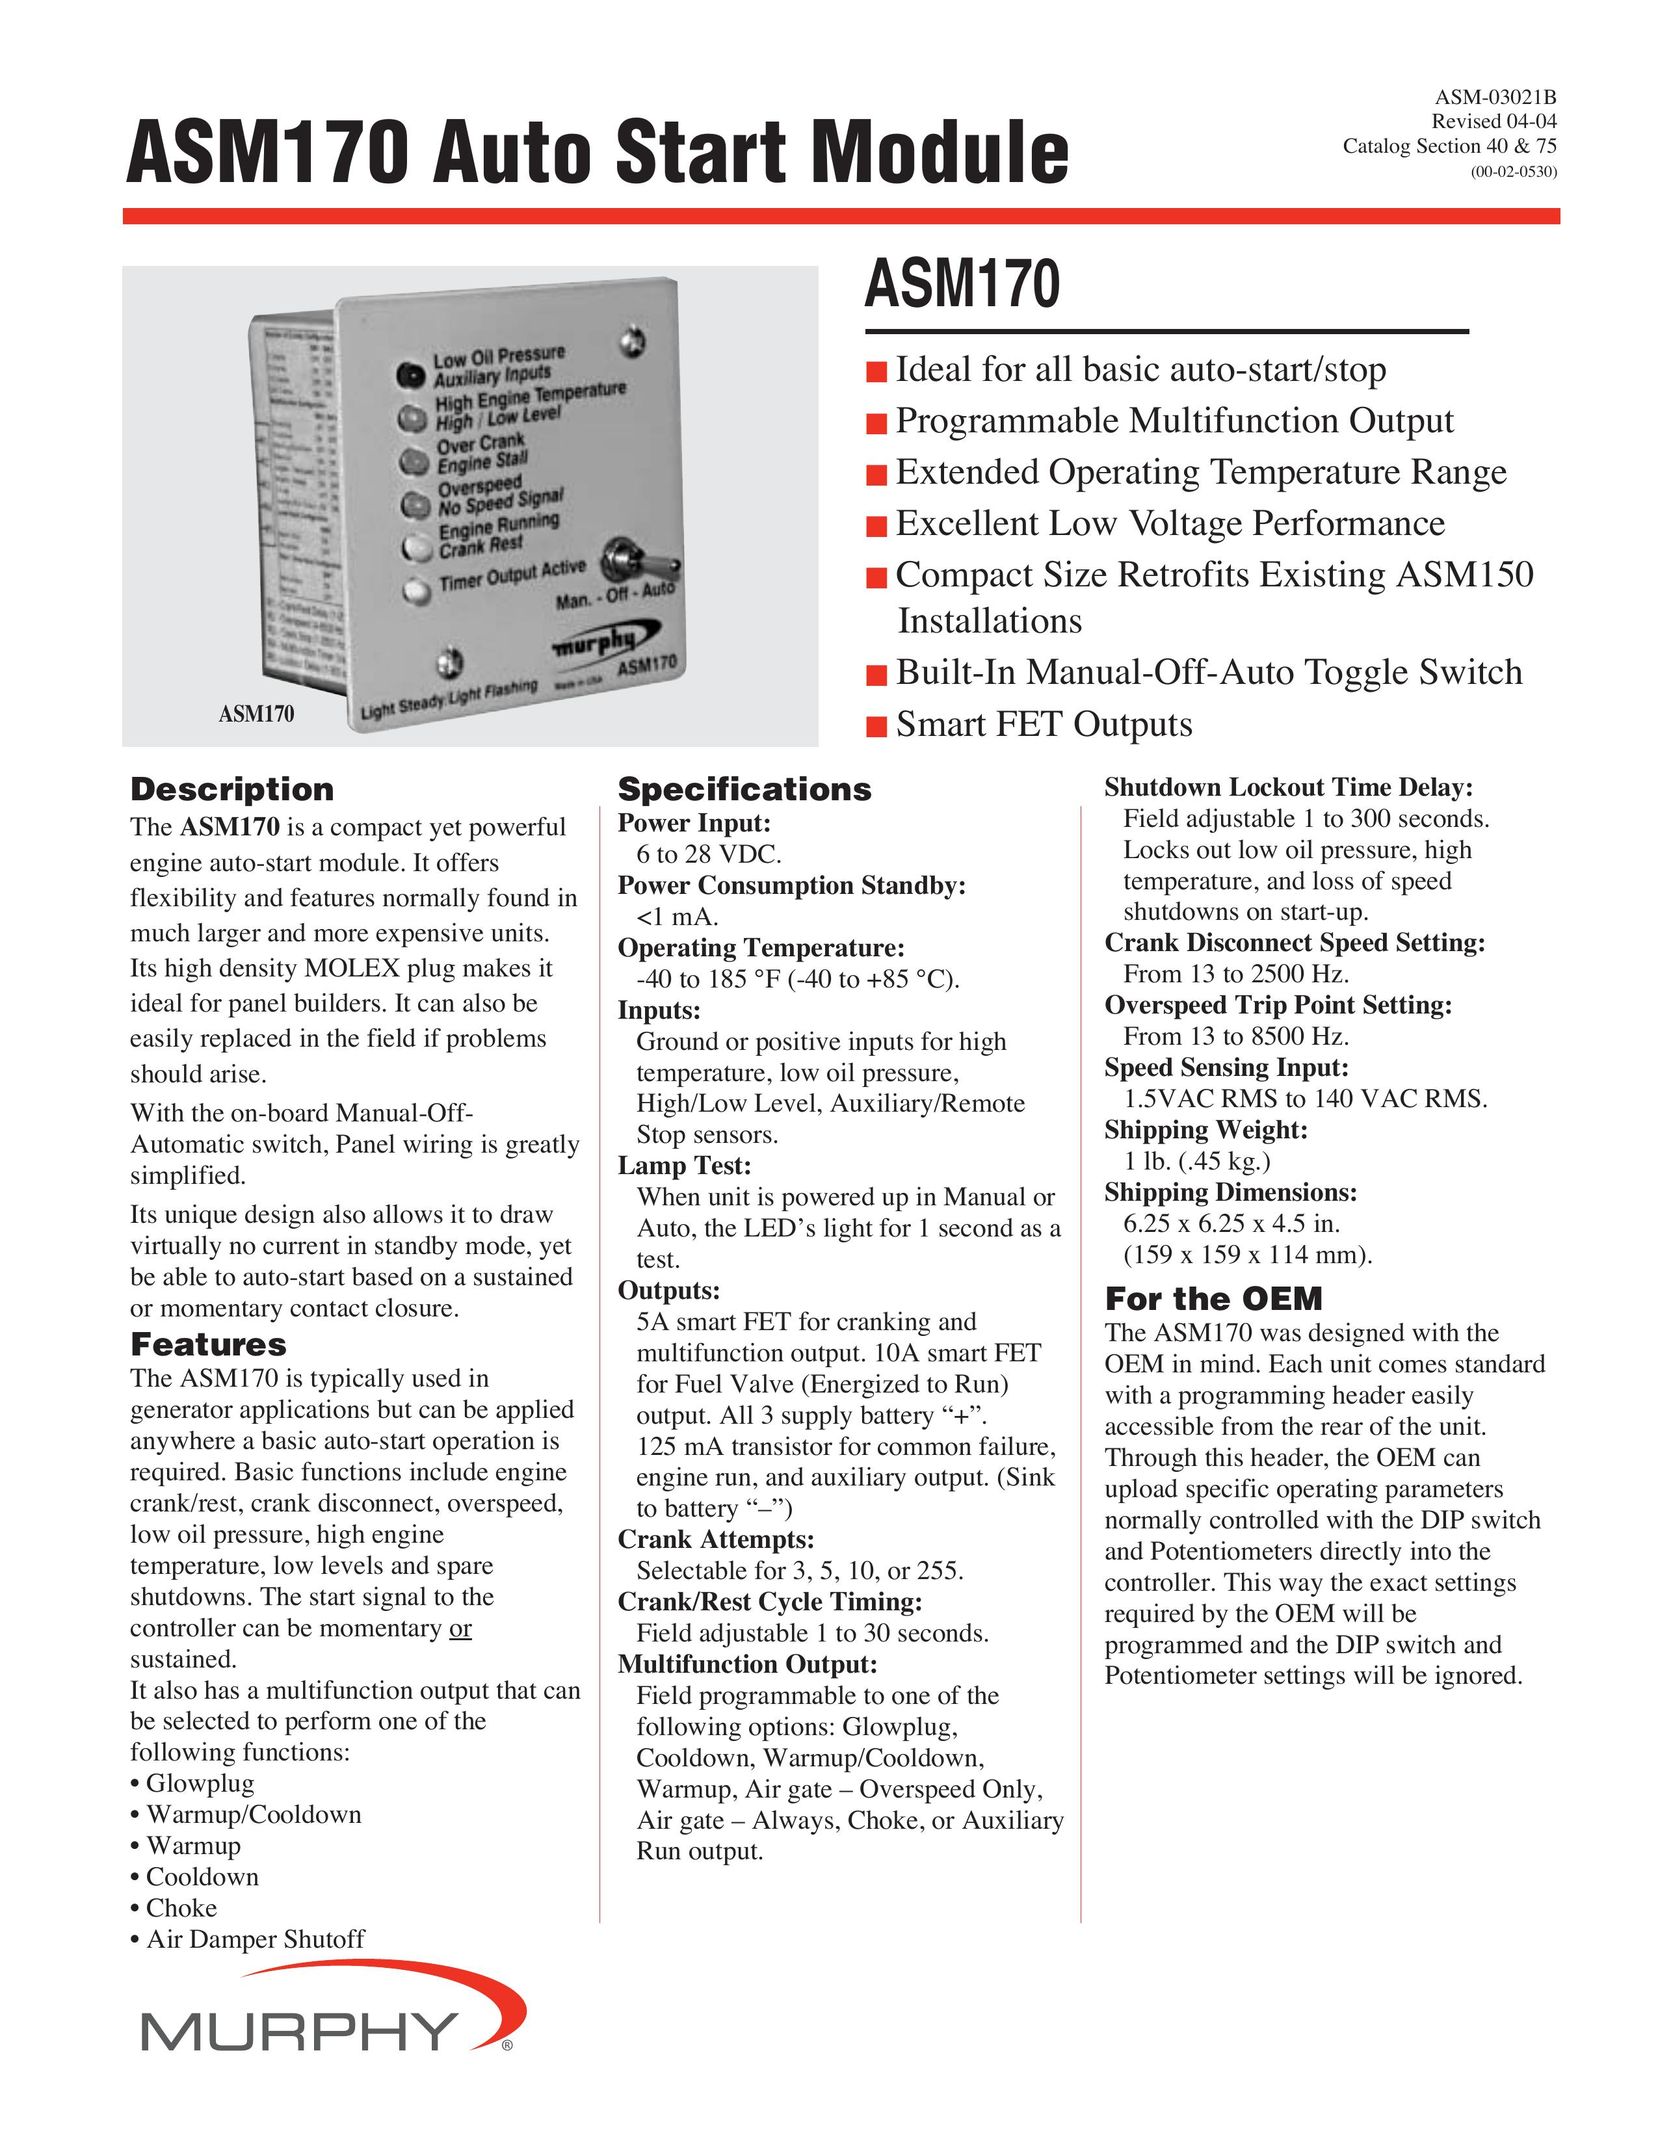 Murphy ASM170 Network Card User Manual